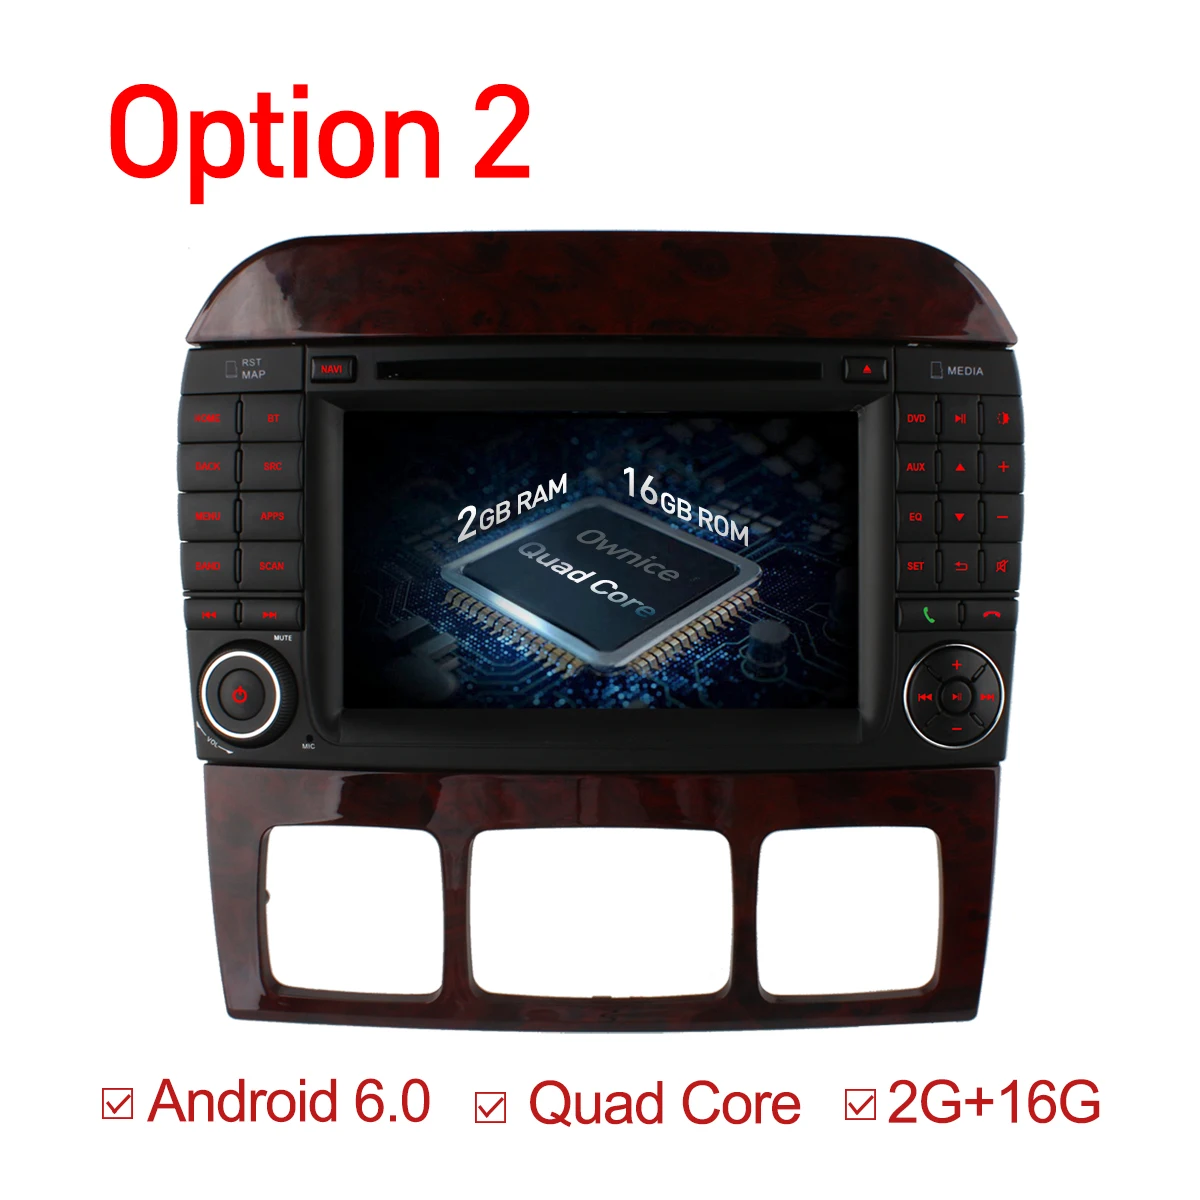 Ownice C500 Android 6.0 Octa Core Auto DVD Atskaņotājs Mercedes S Klasi W220 S280 S320 S350 S400 S420 S430 GPS Navi Radio wifi 4G